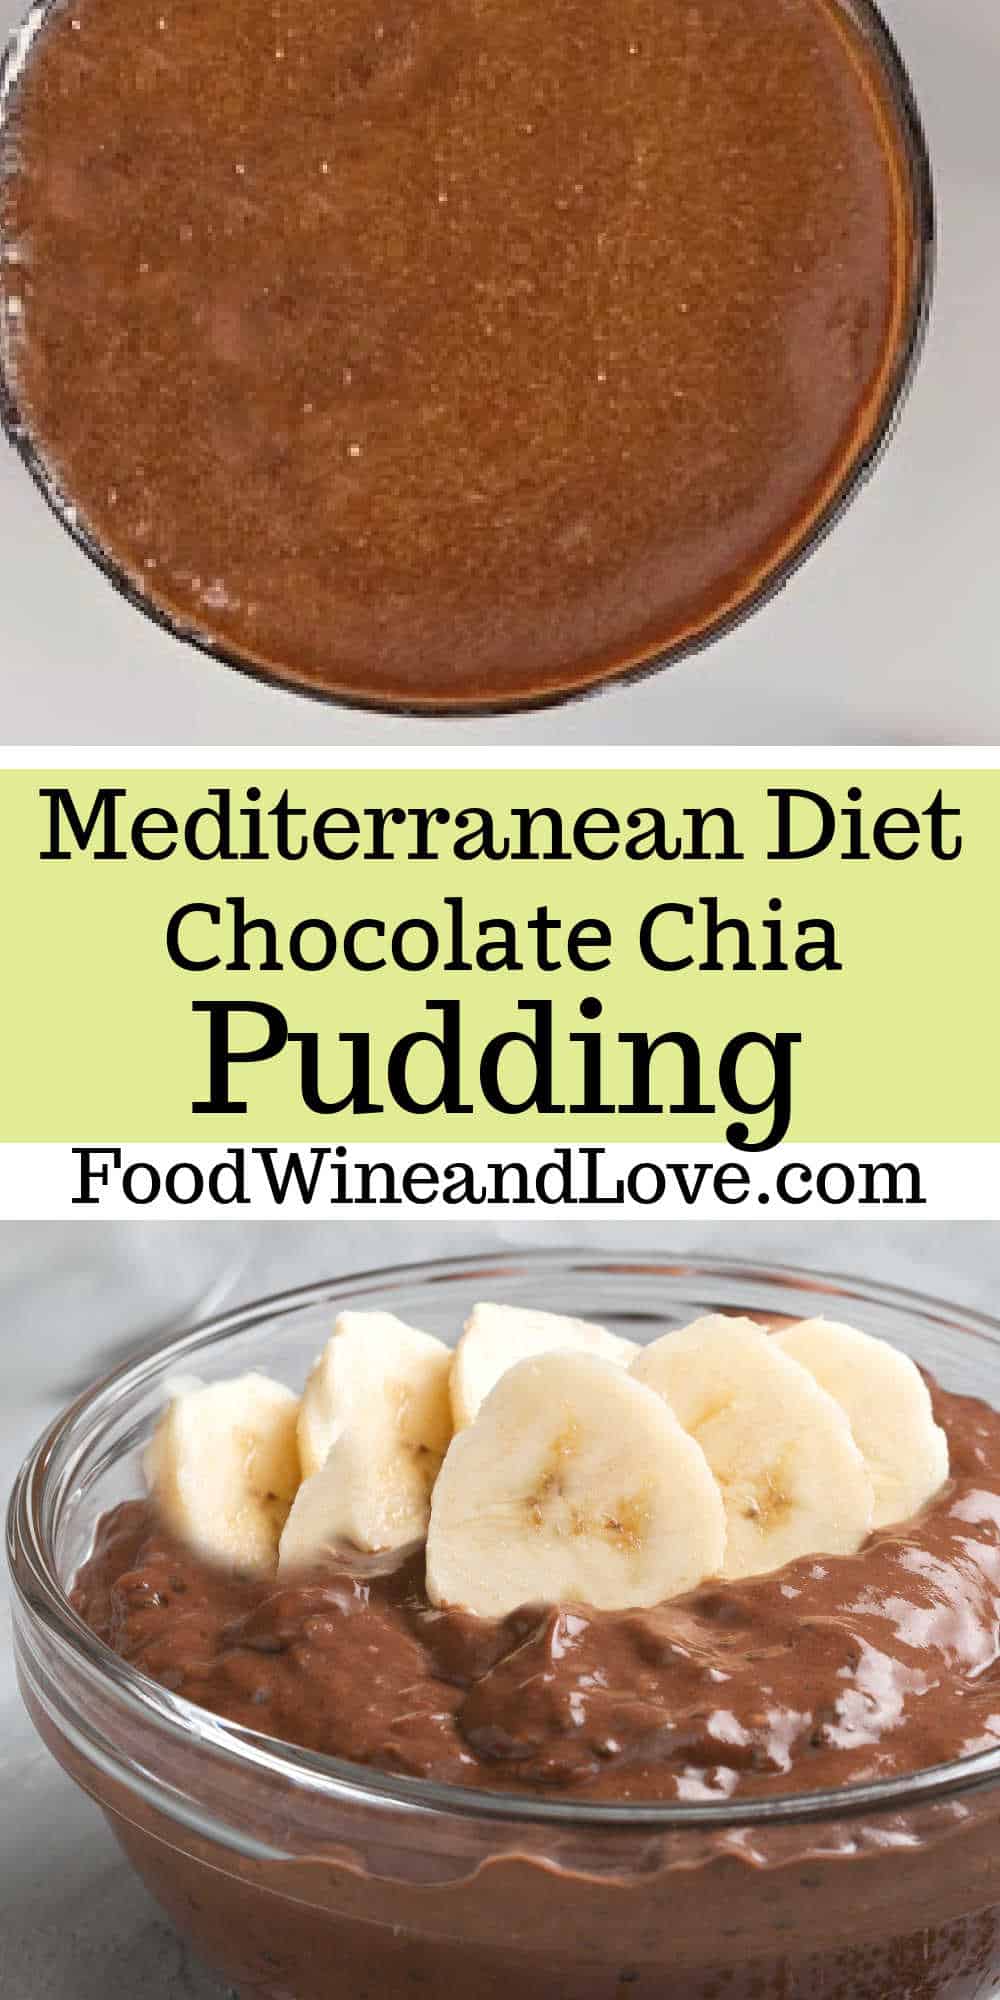 Mediterranean Diet Chocolate Chia Pudding